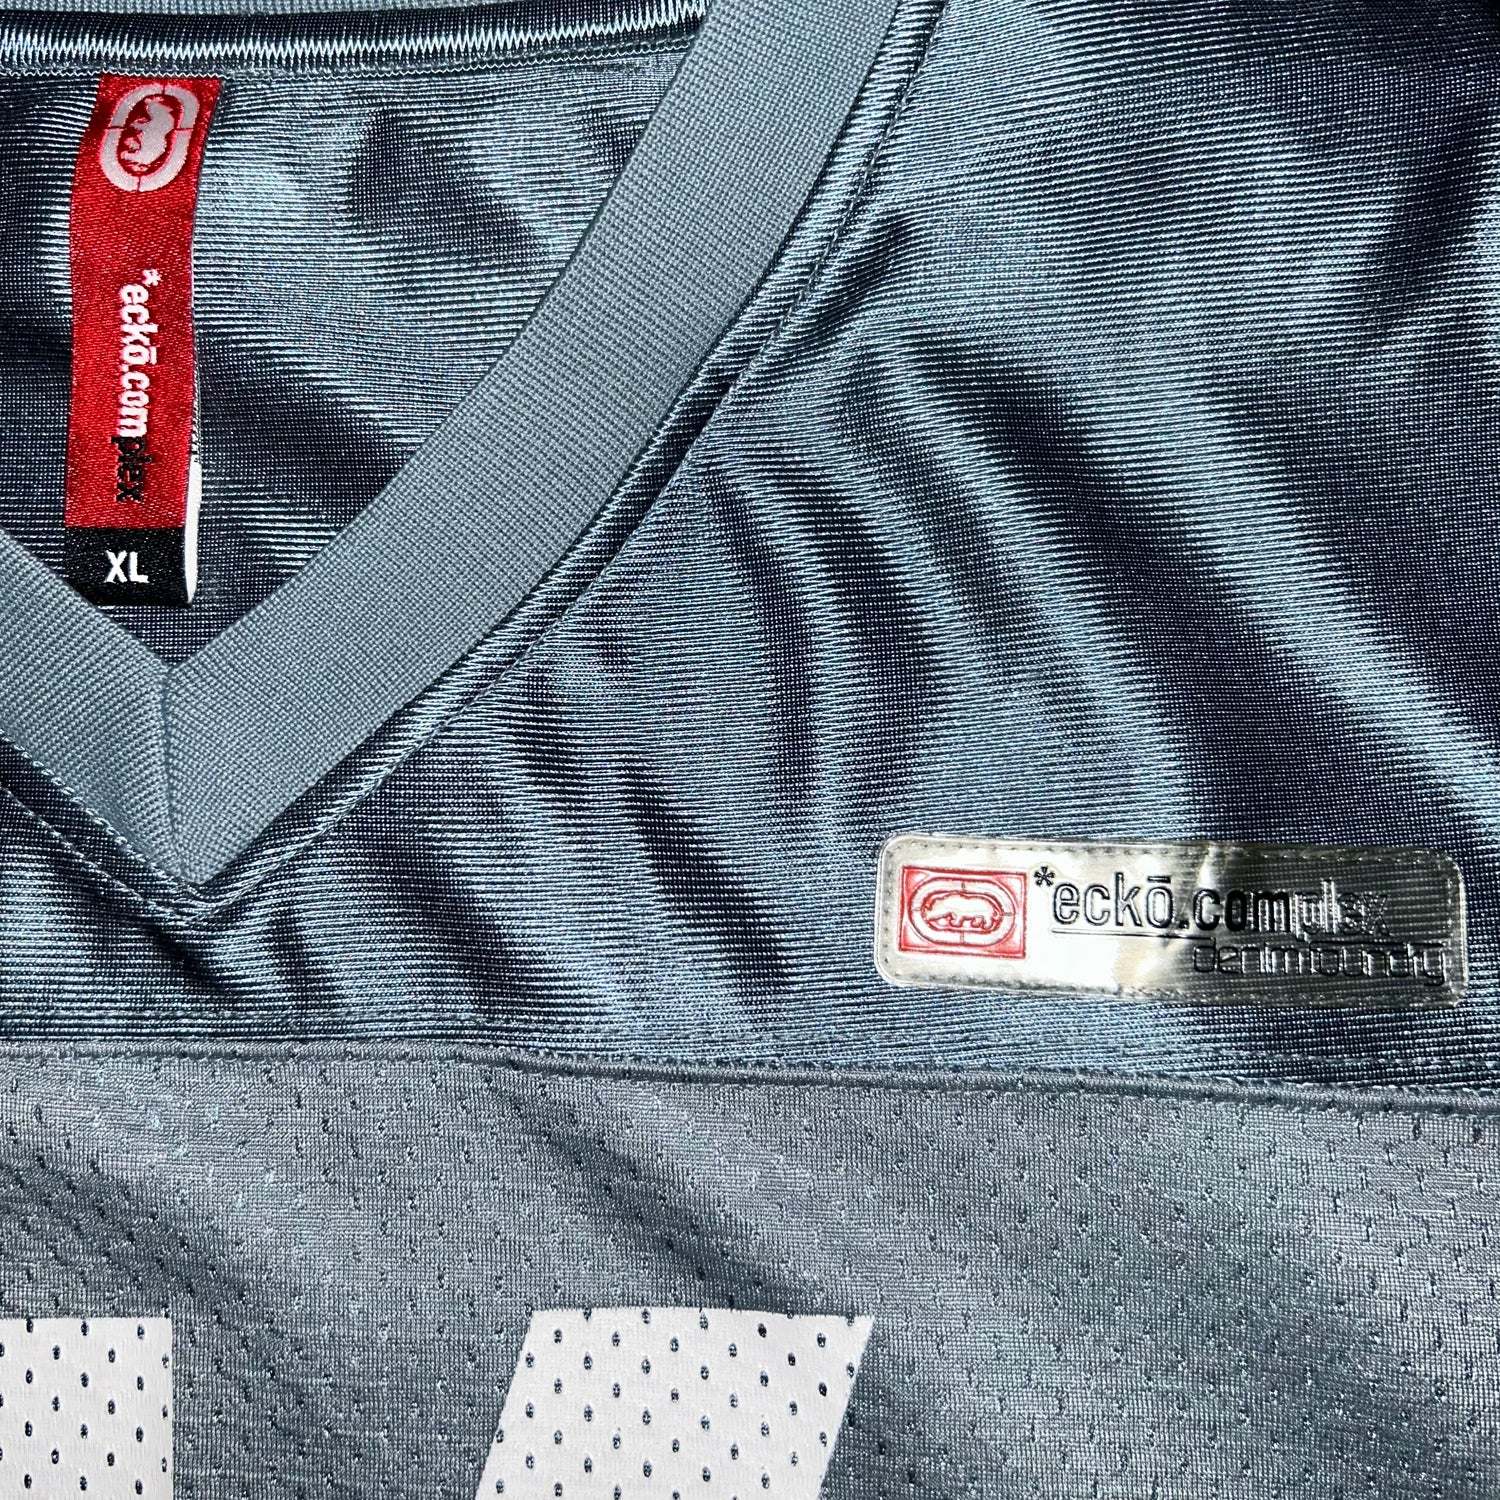 Ecko Unlimited Vintage Jersey (XL)